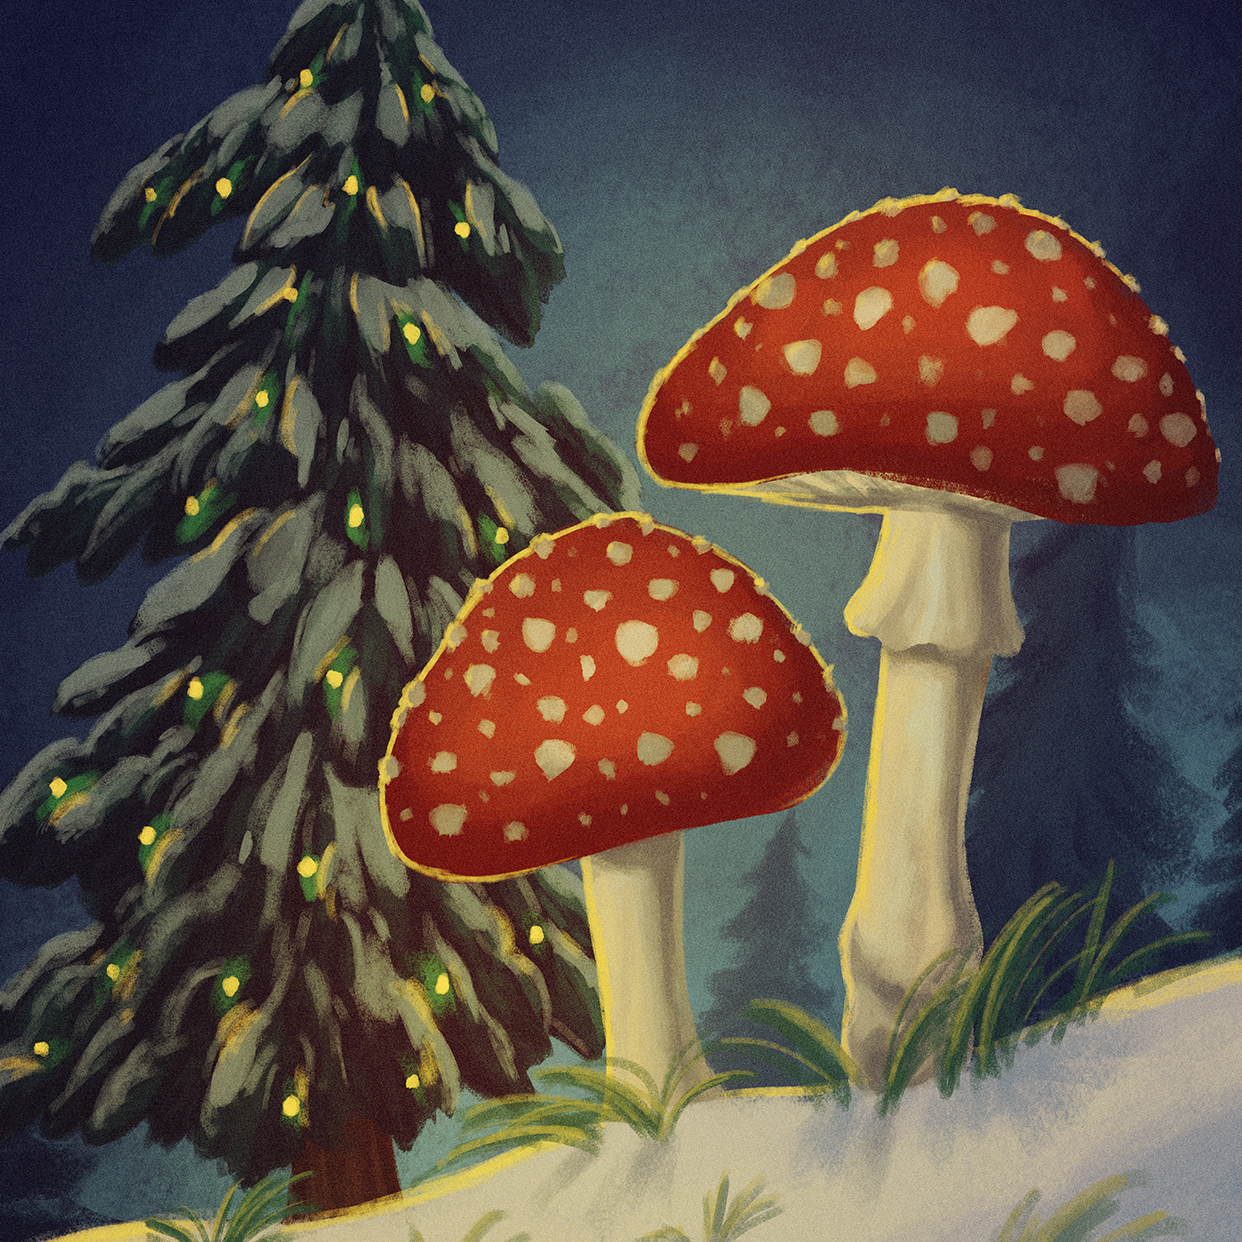 The Fantastic Fungi Holiday Gift Guide